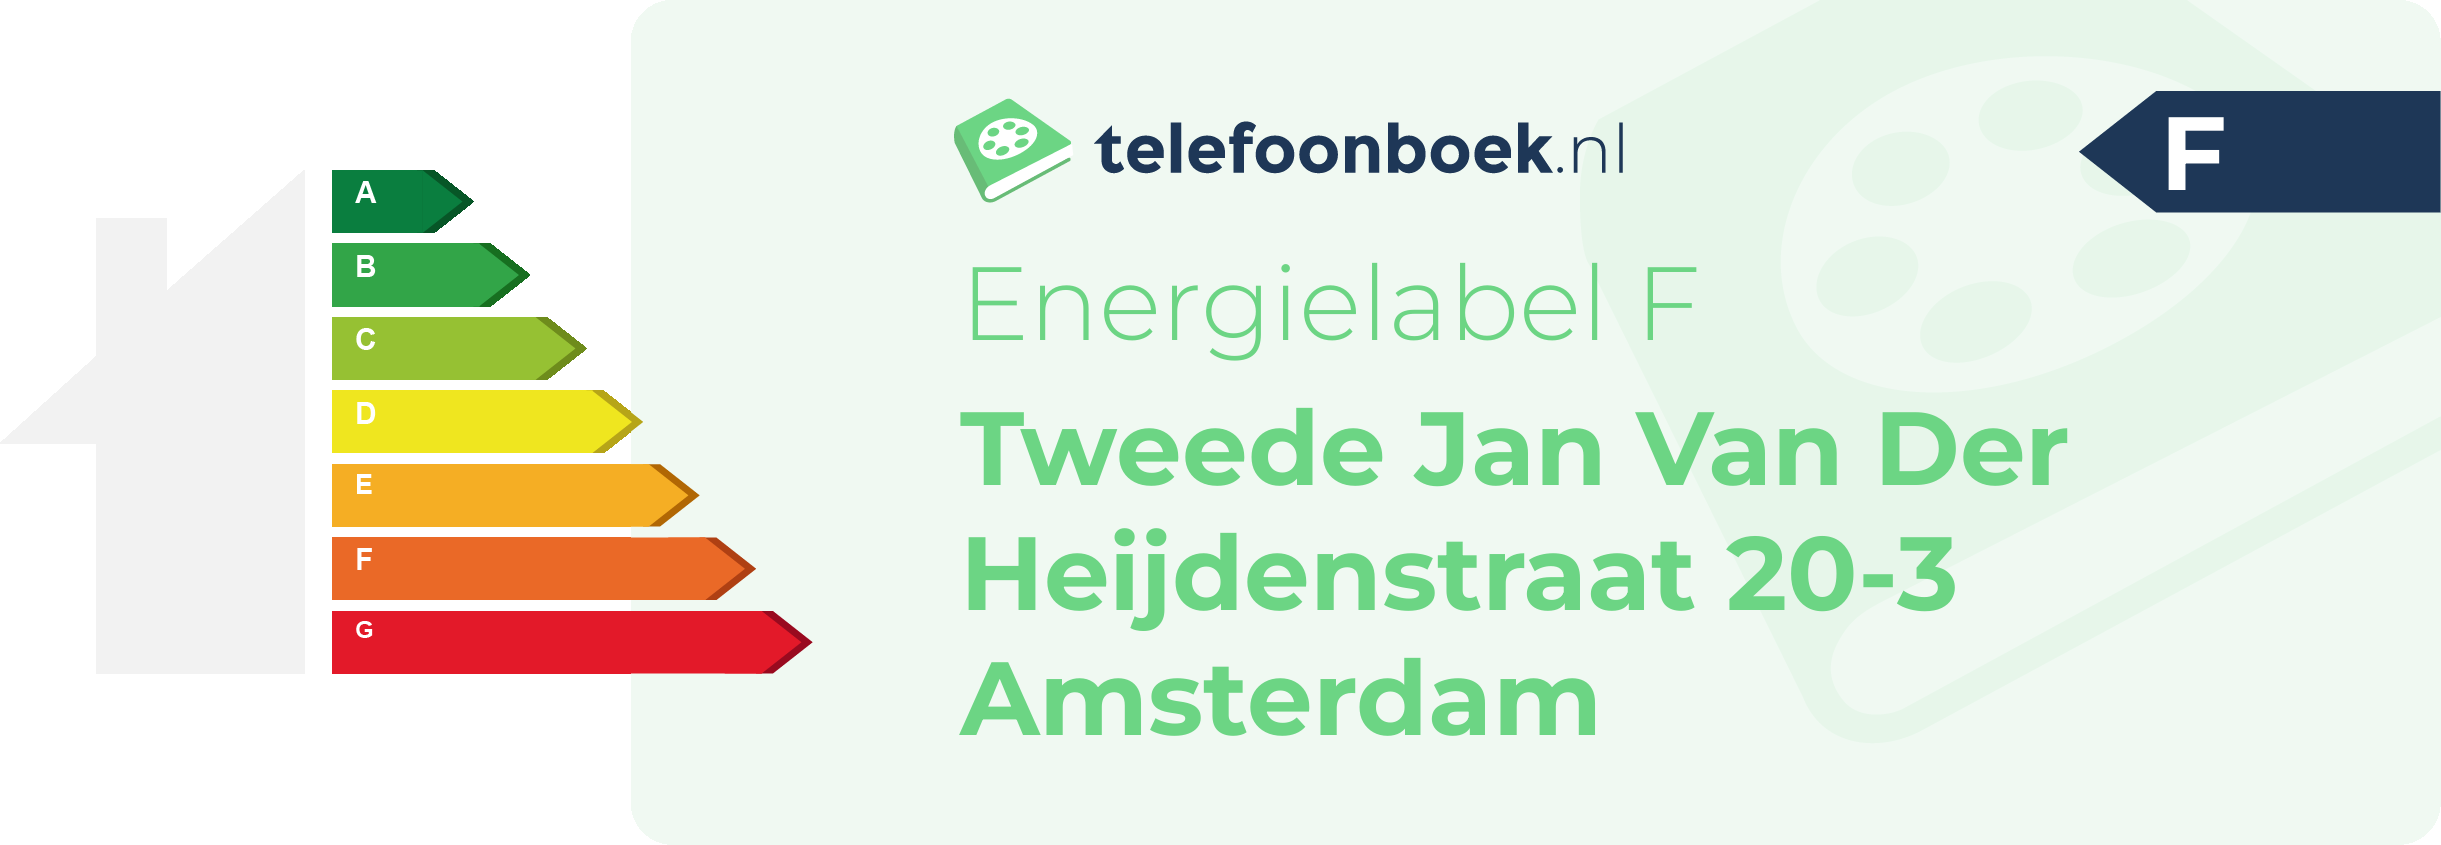 Energielabel Tweede Jan Van Der Heijdenstraat 20-3 Amsterdam